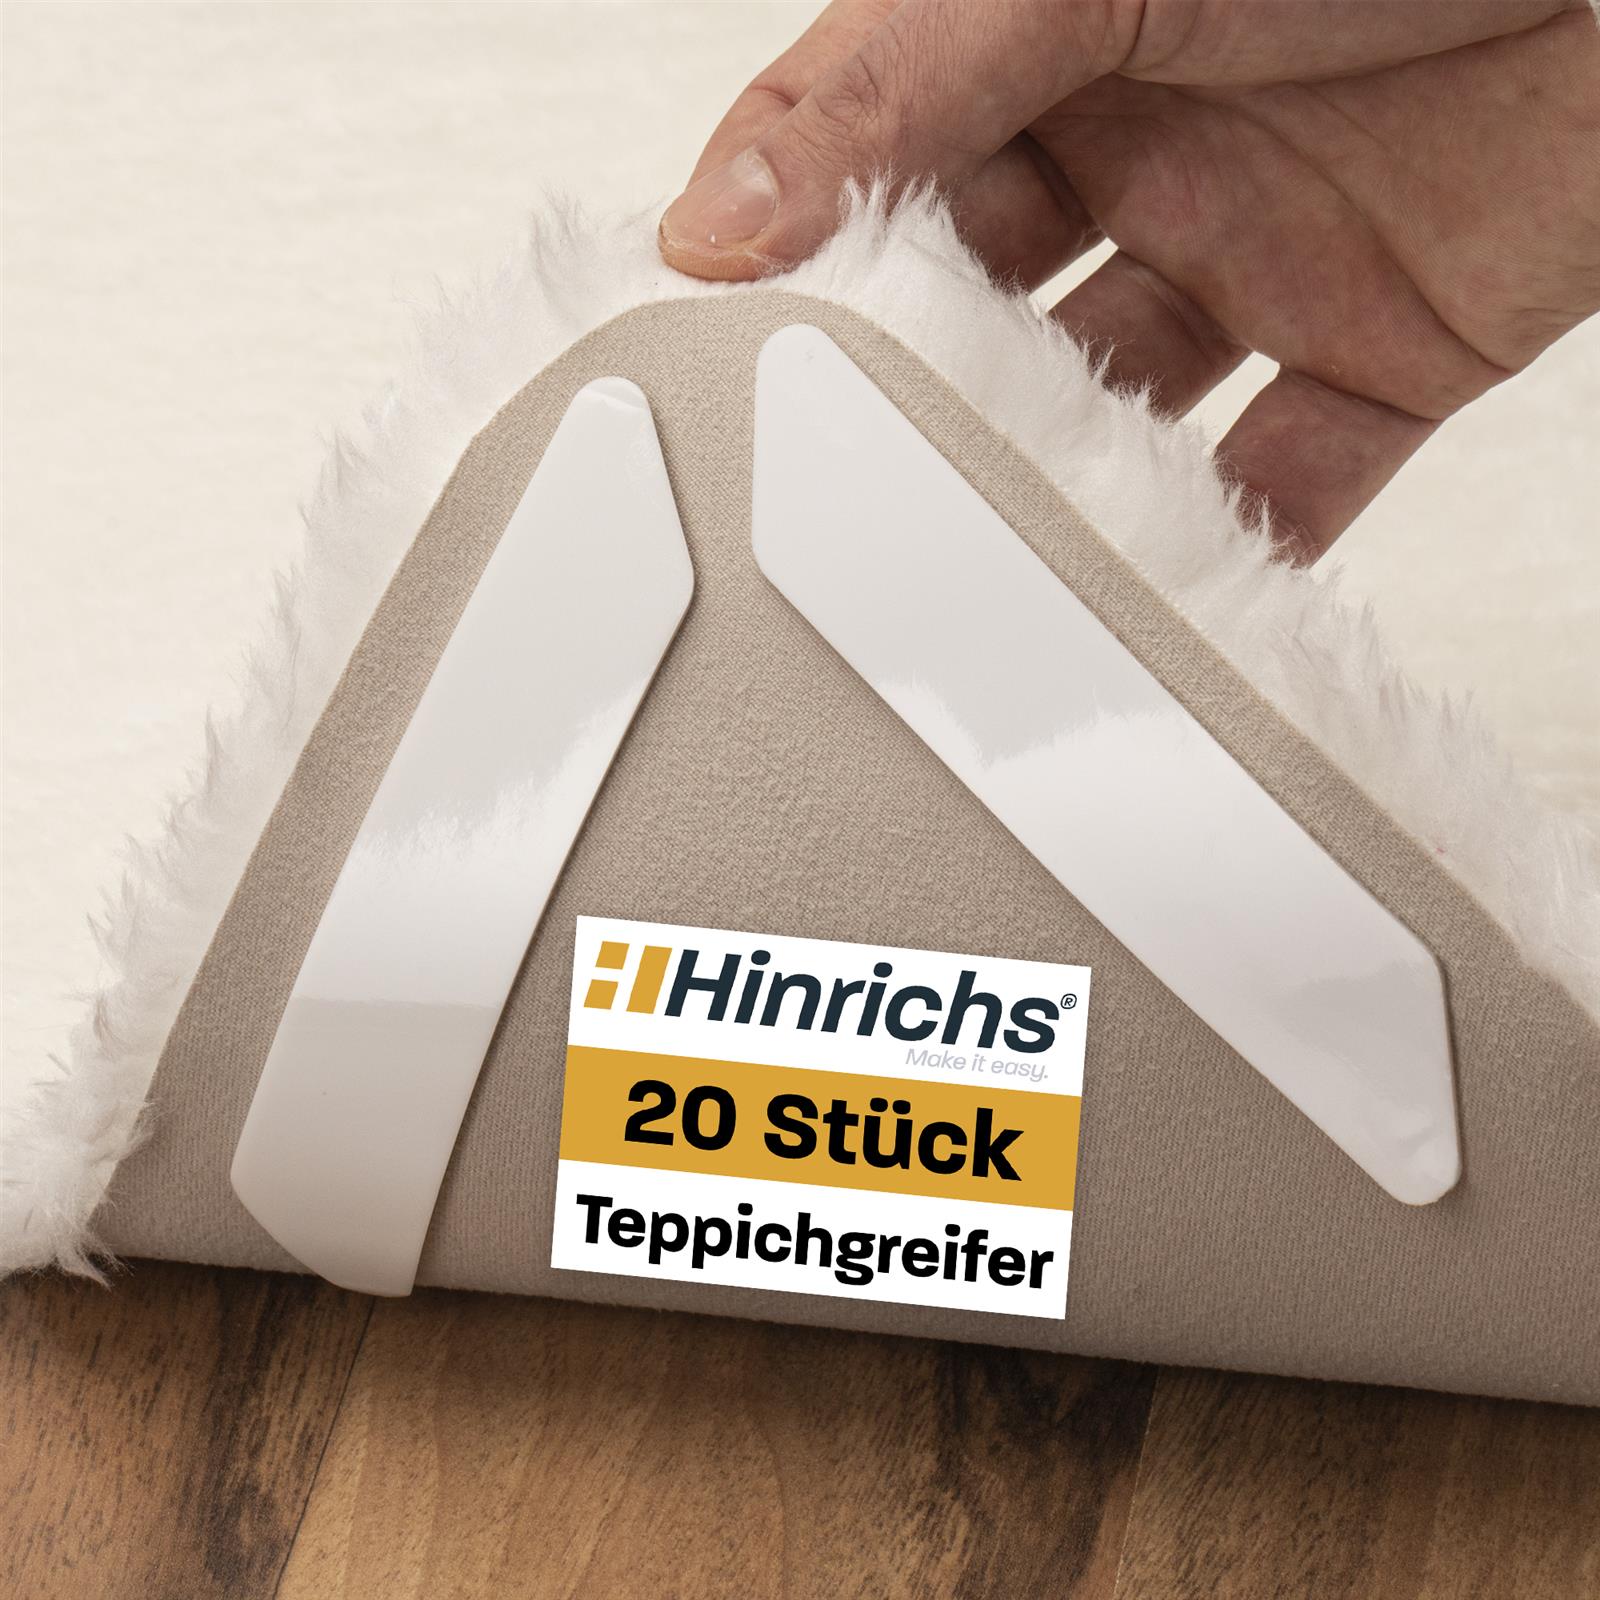 https://hinrichs-tools.de/media/image/72/9c/9b/3343_Teppich_Greifer_Titelbild-jpg.jpg